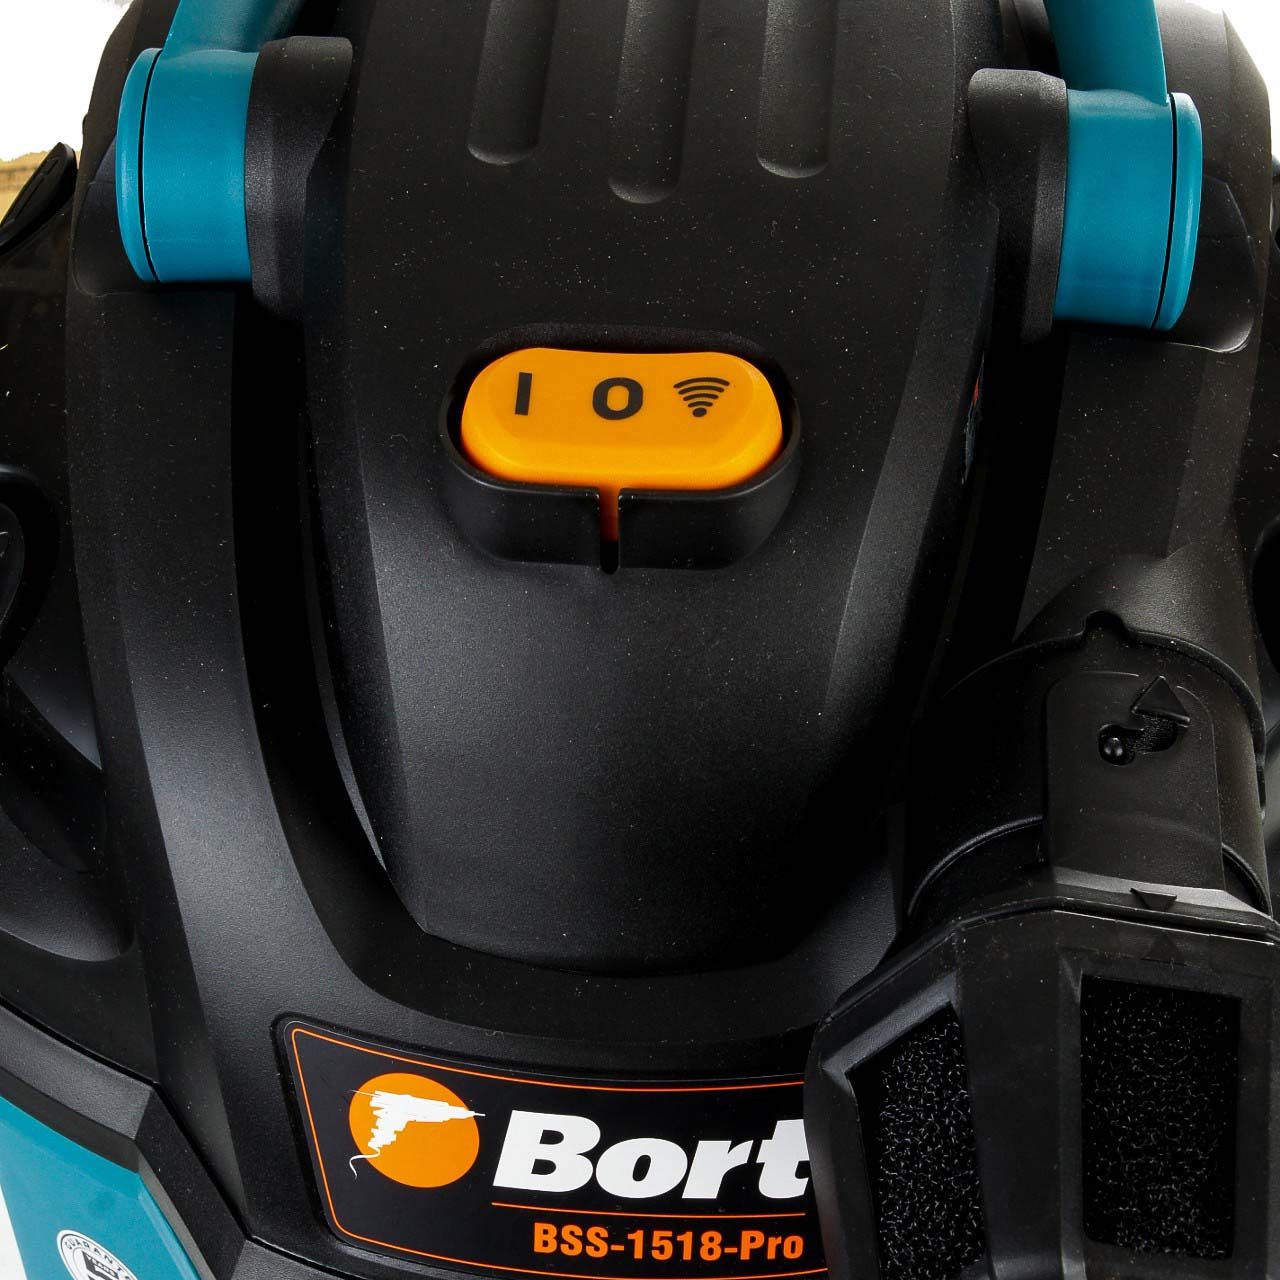       Bort BSS-1518-Pro